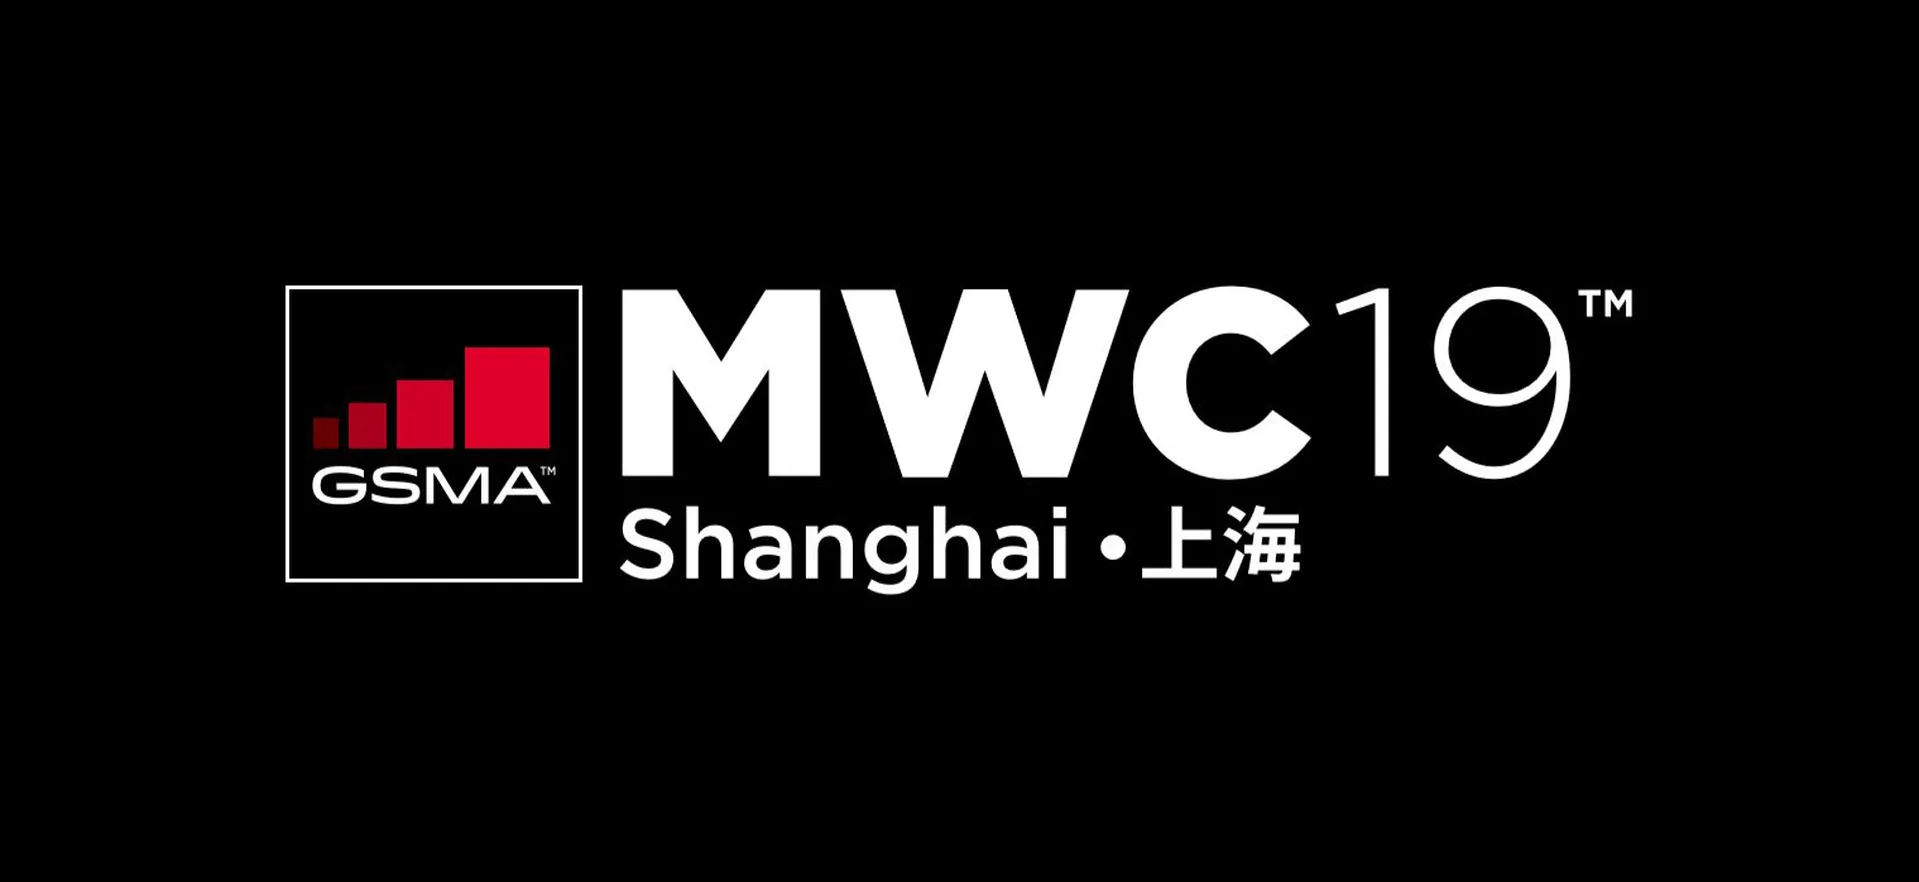 Mobile World Congress Shanghai 19